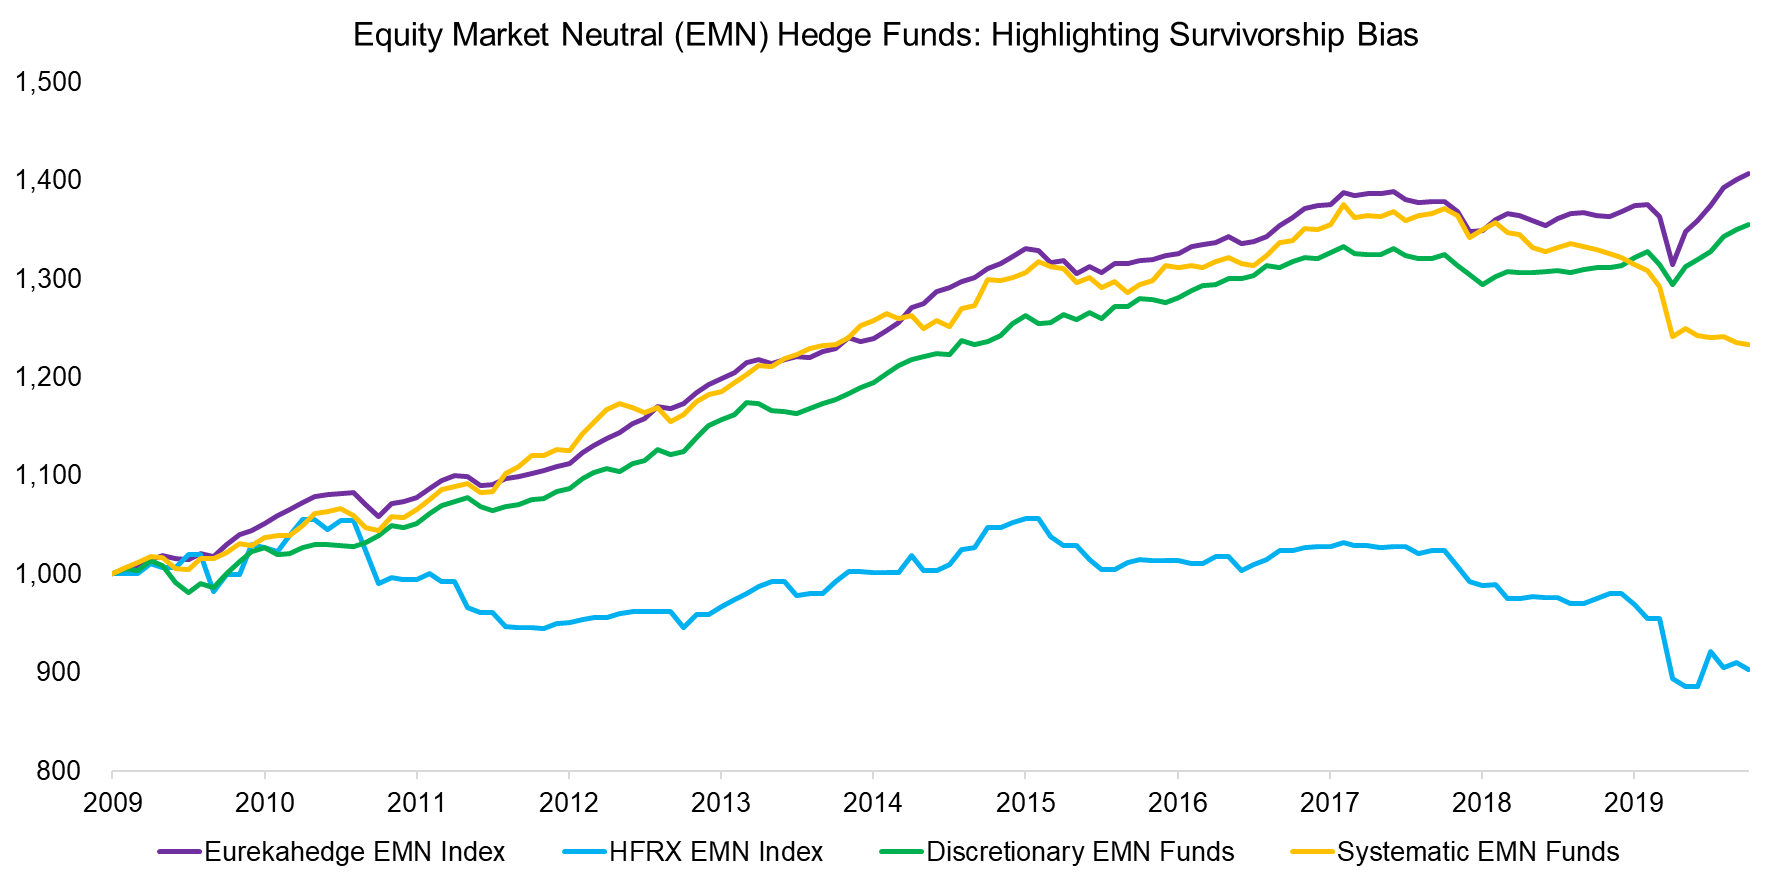 Equity Market Neutral (EMN) Hedge Funds Highlighting Survivorship Bias